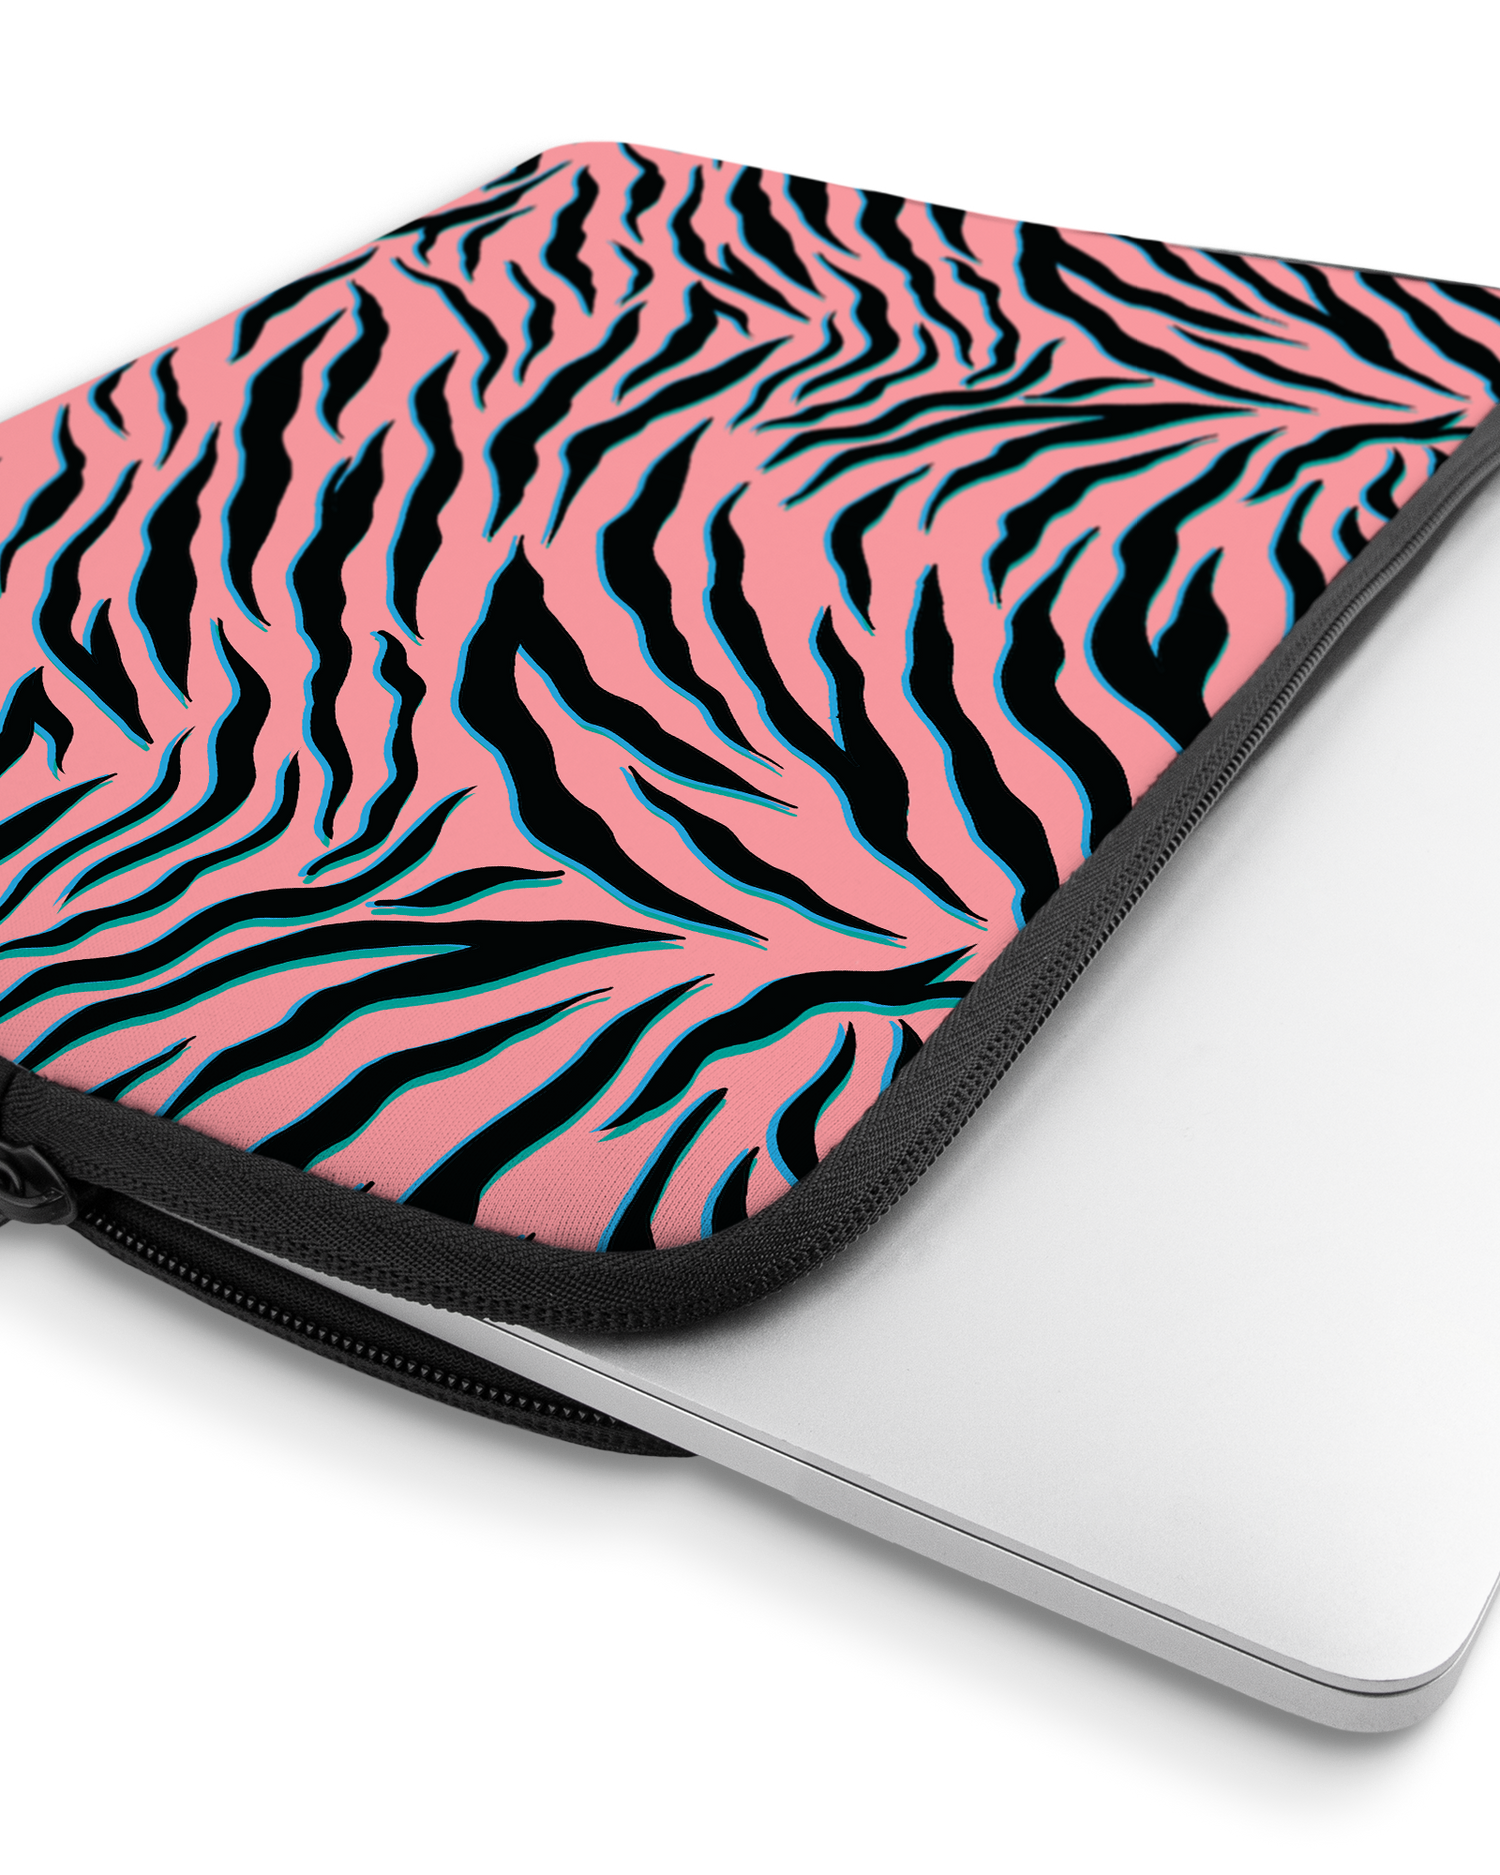 Pink Zebra Laptophülle 13 Zoll mit Gerät im Inneren